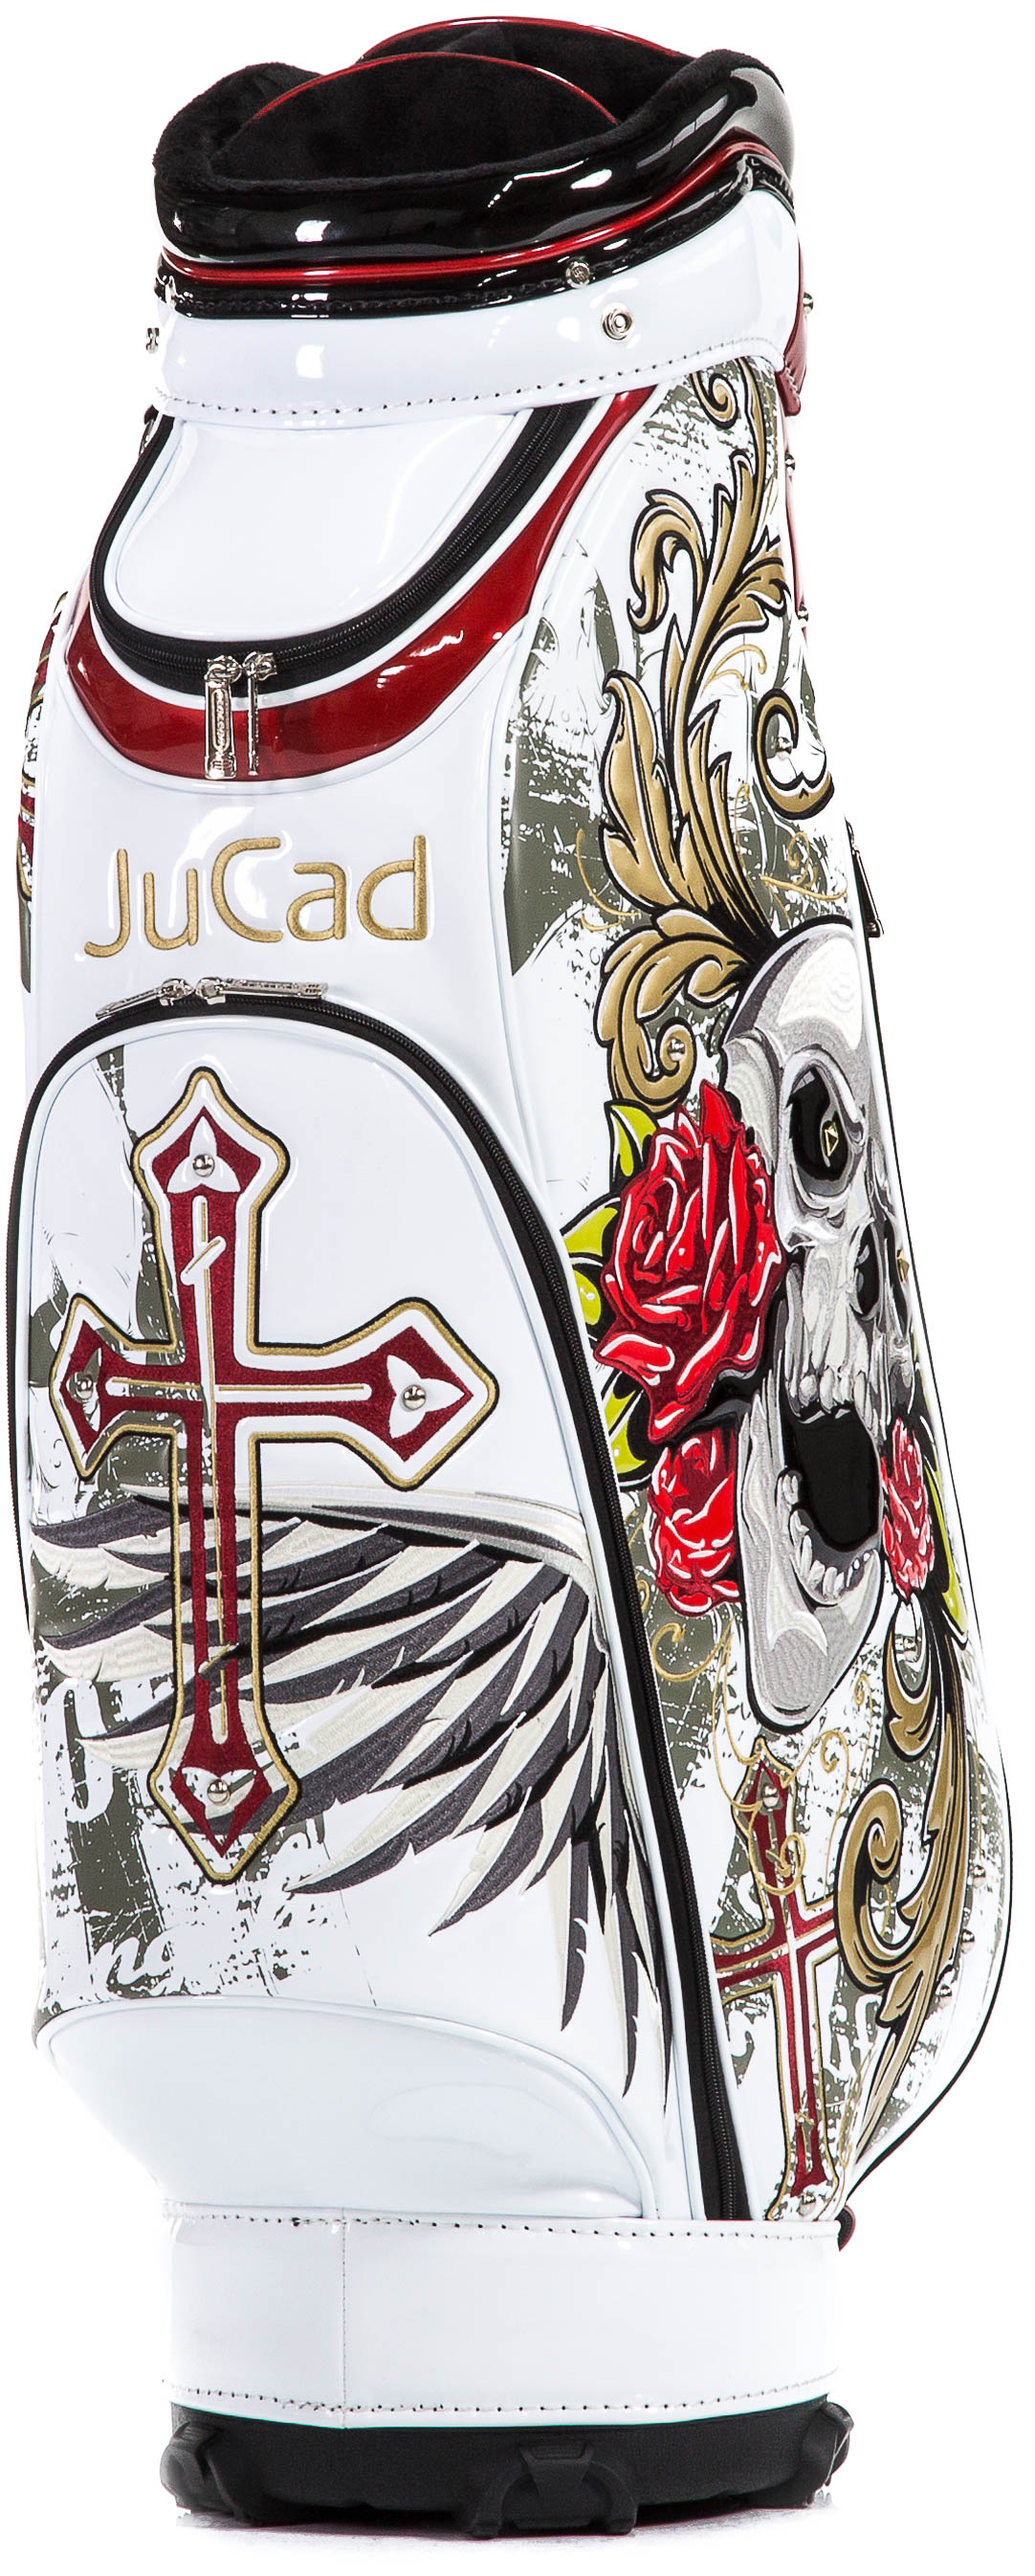 JuCad Luxury Cartbag